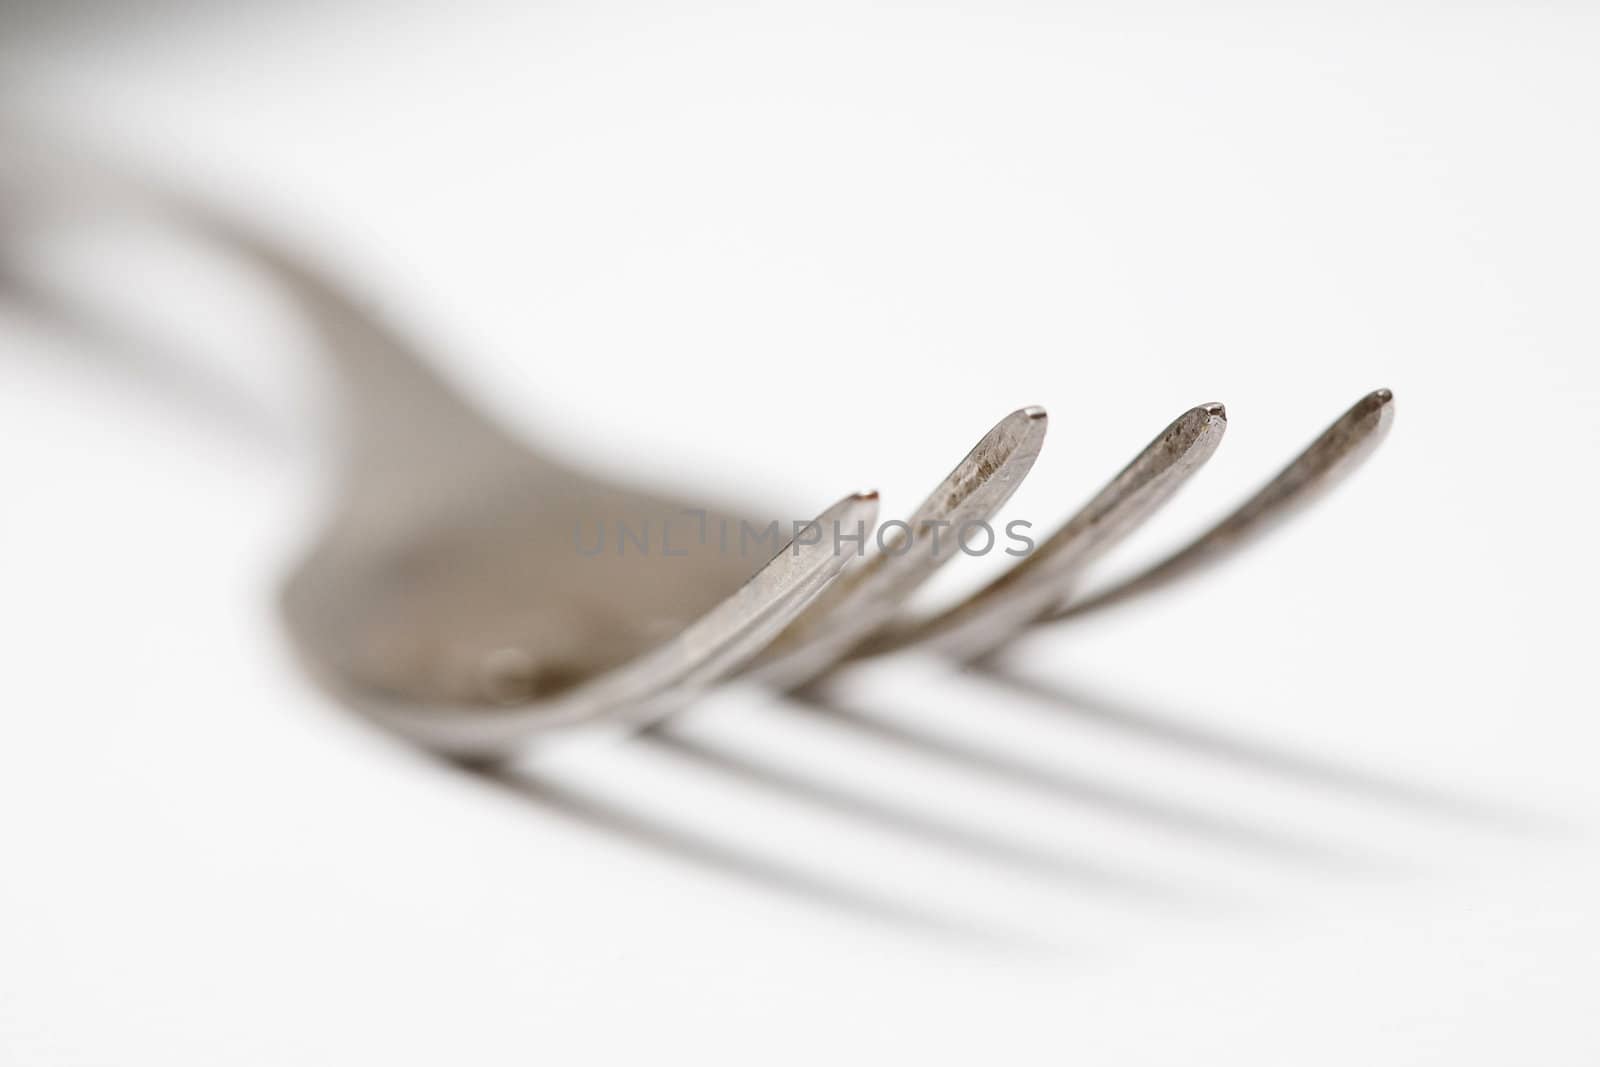 Stock photo: food theme: an image of big steel fork closeup